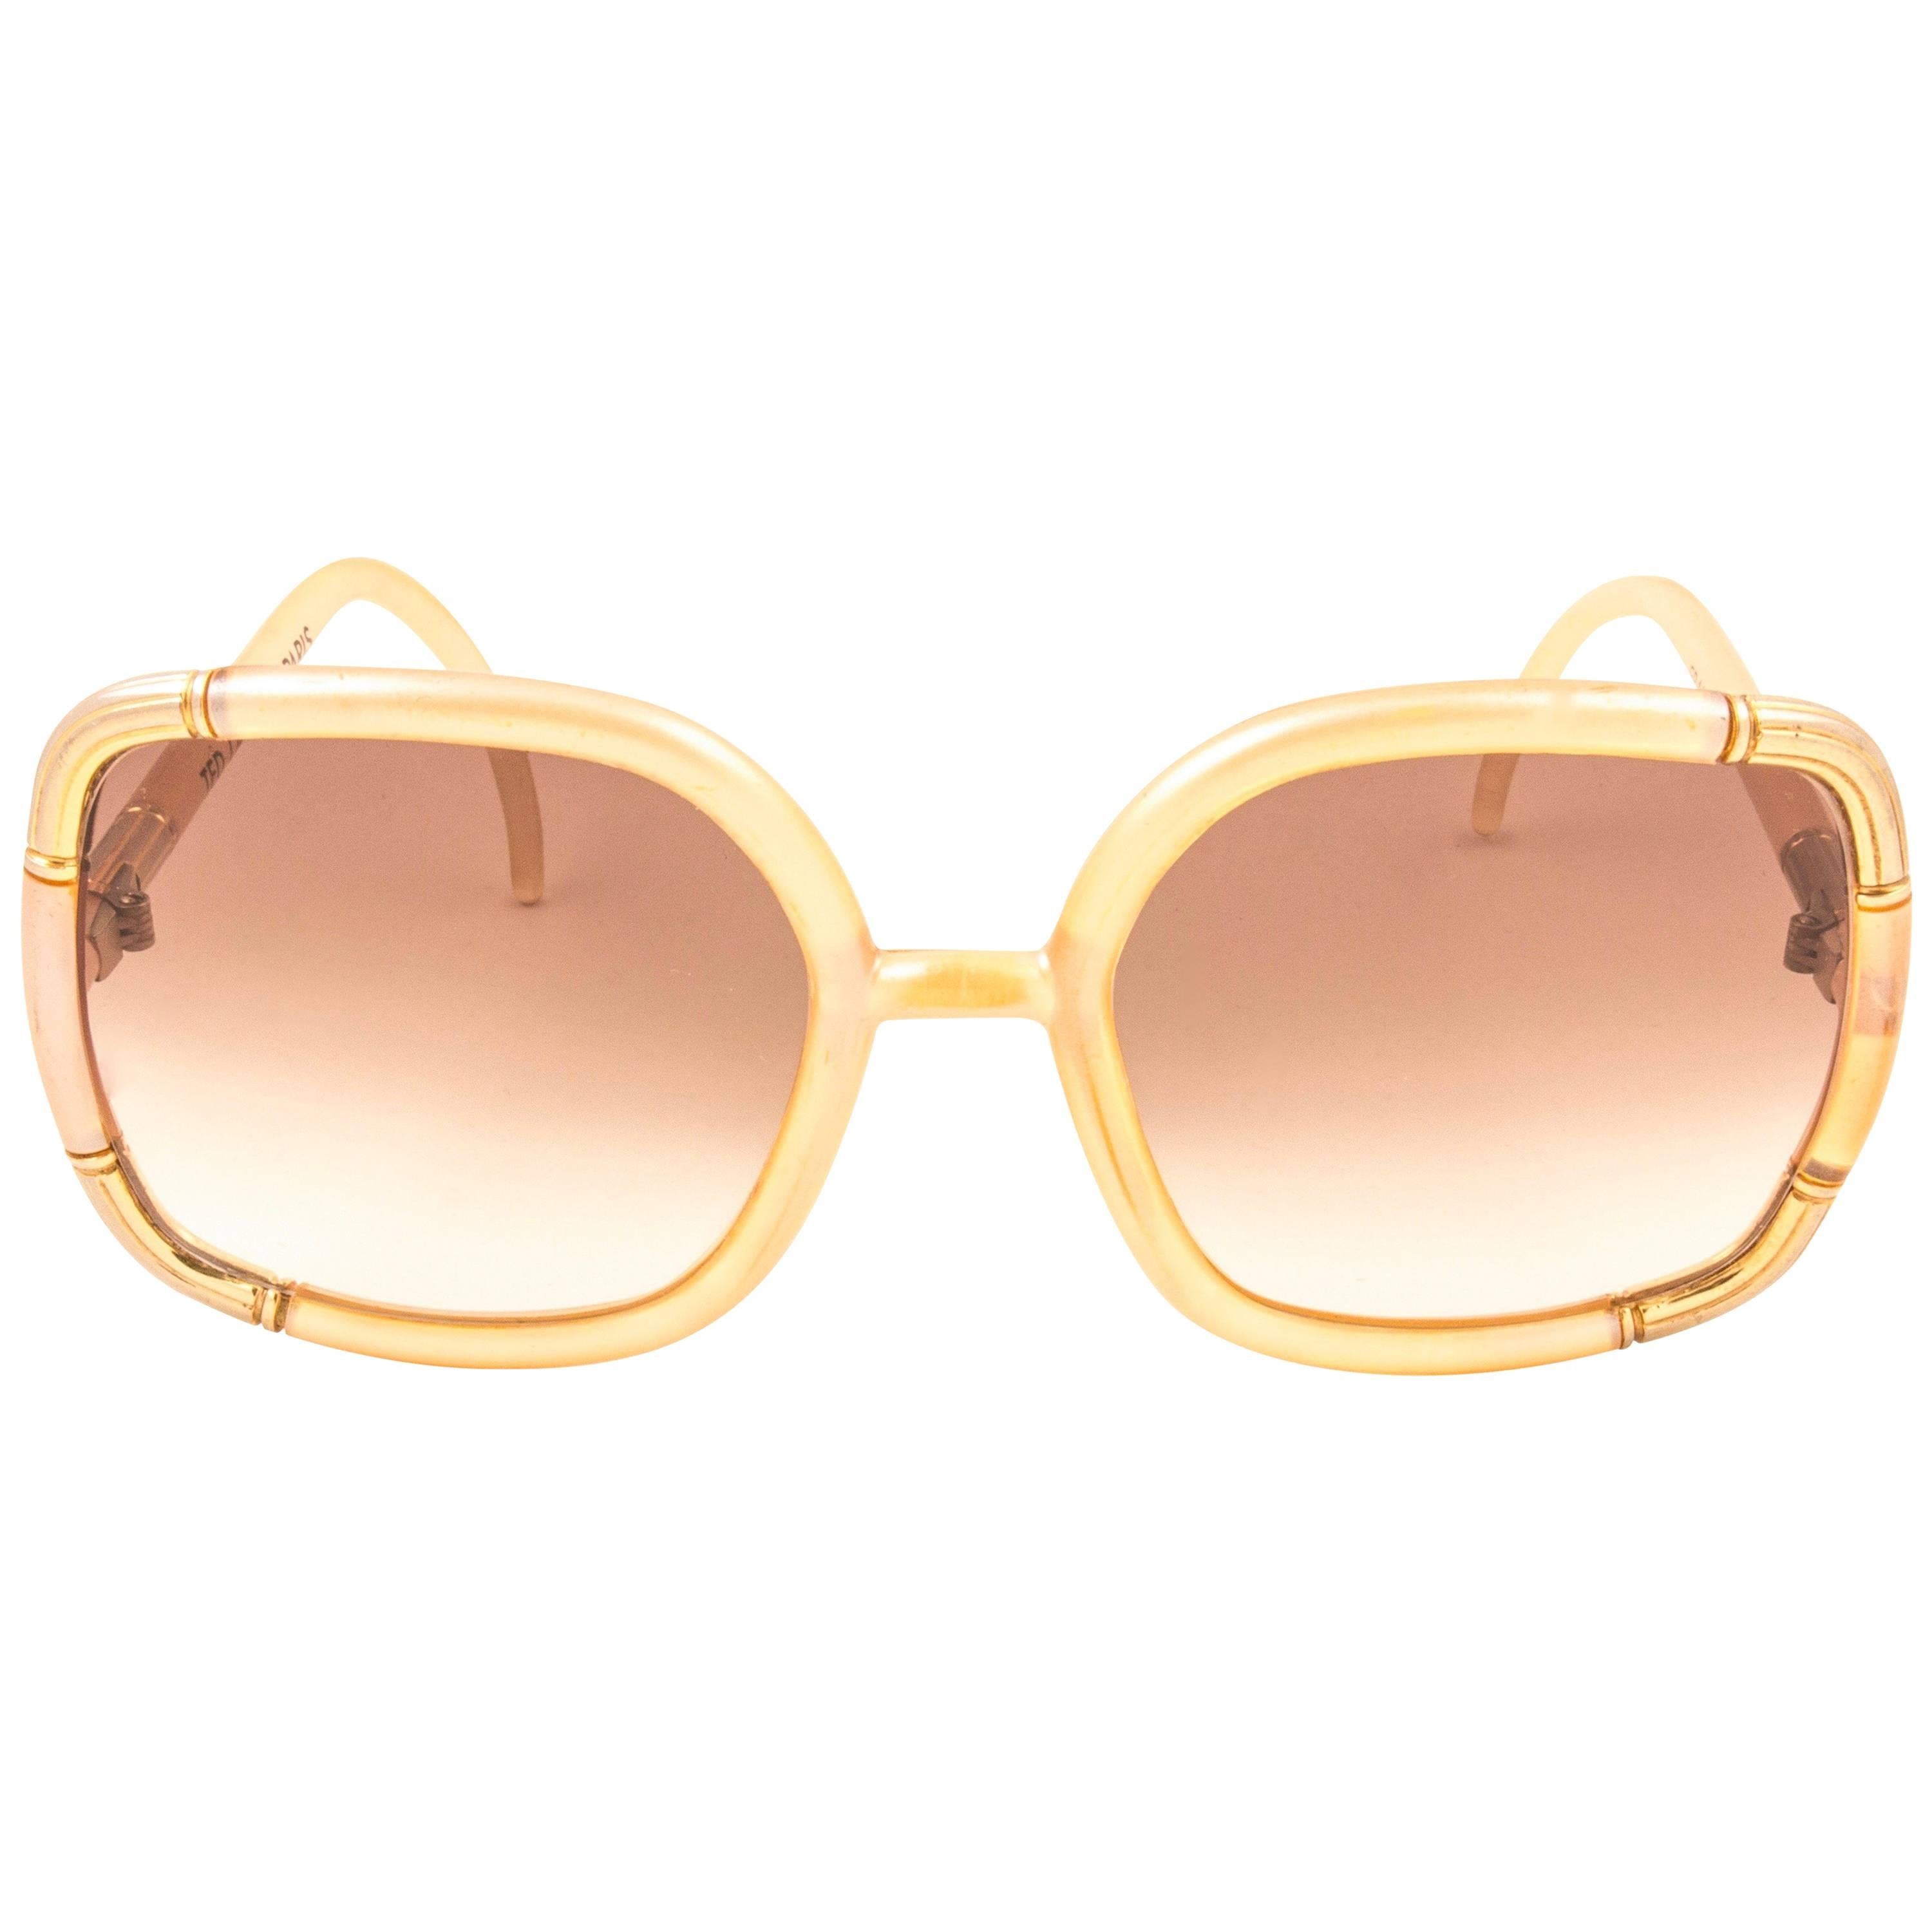 New Vintage Ted Lapidus Paris Pearled Beige & Gold 1970 Sunglasses